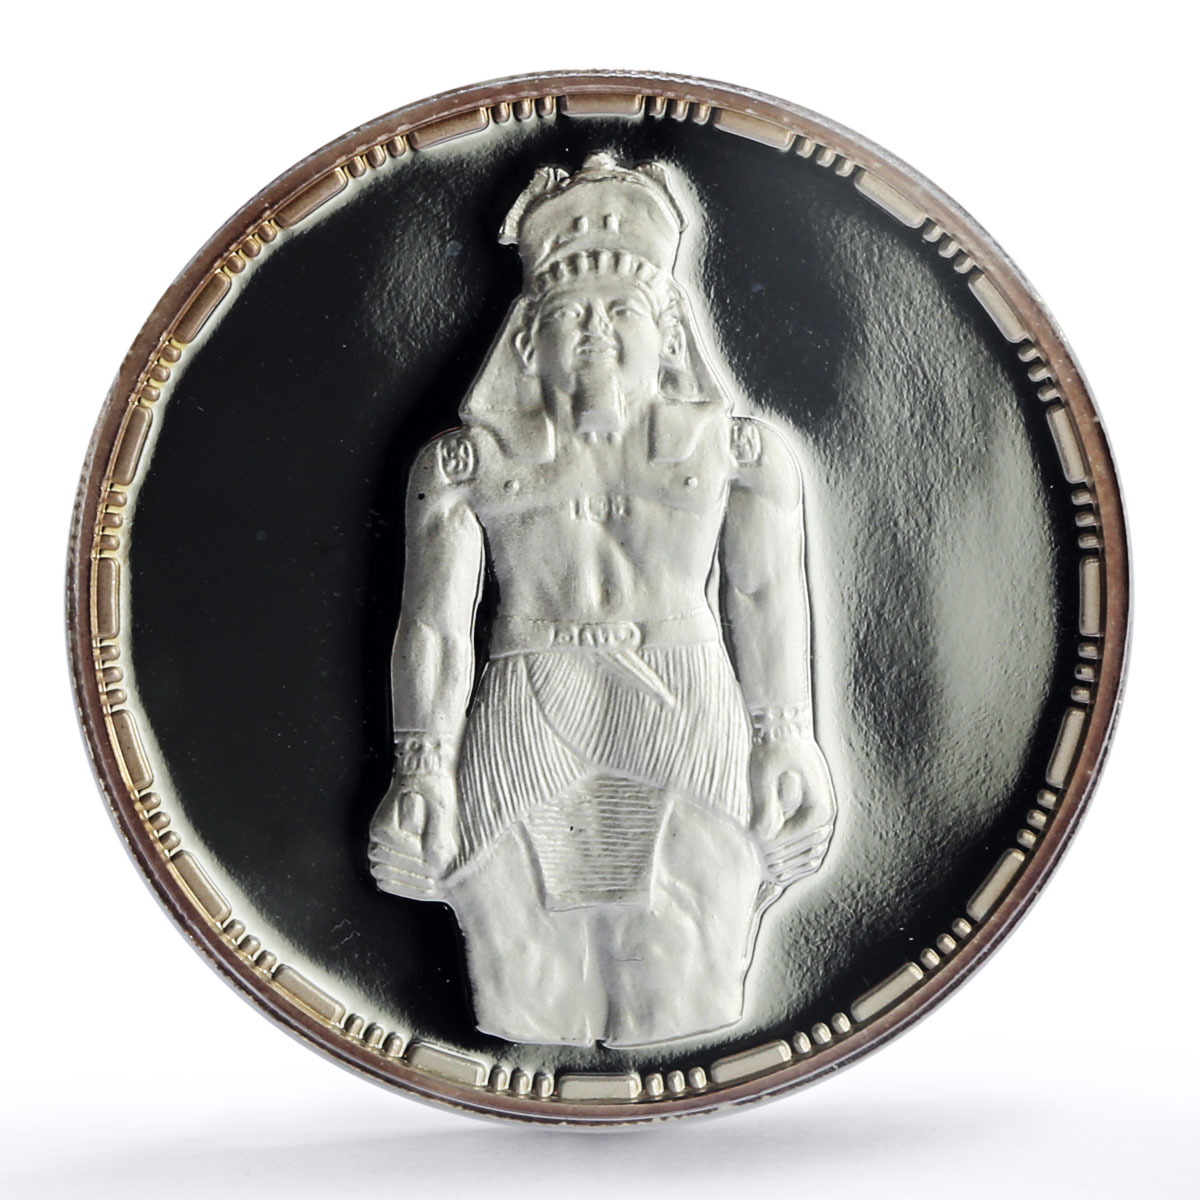 Egypt 5 pounds Ancient Treasures King Ramses II Sculpture PR68 PCGS Ag coin 1993